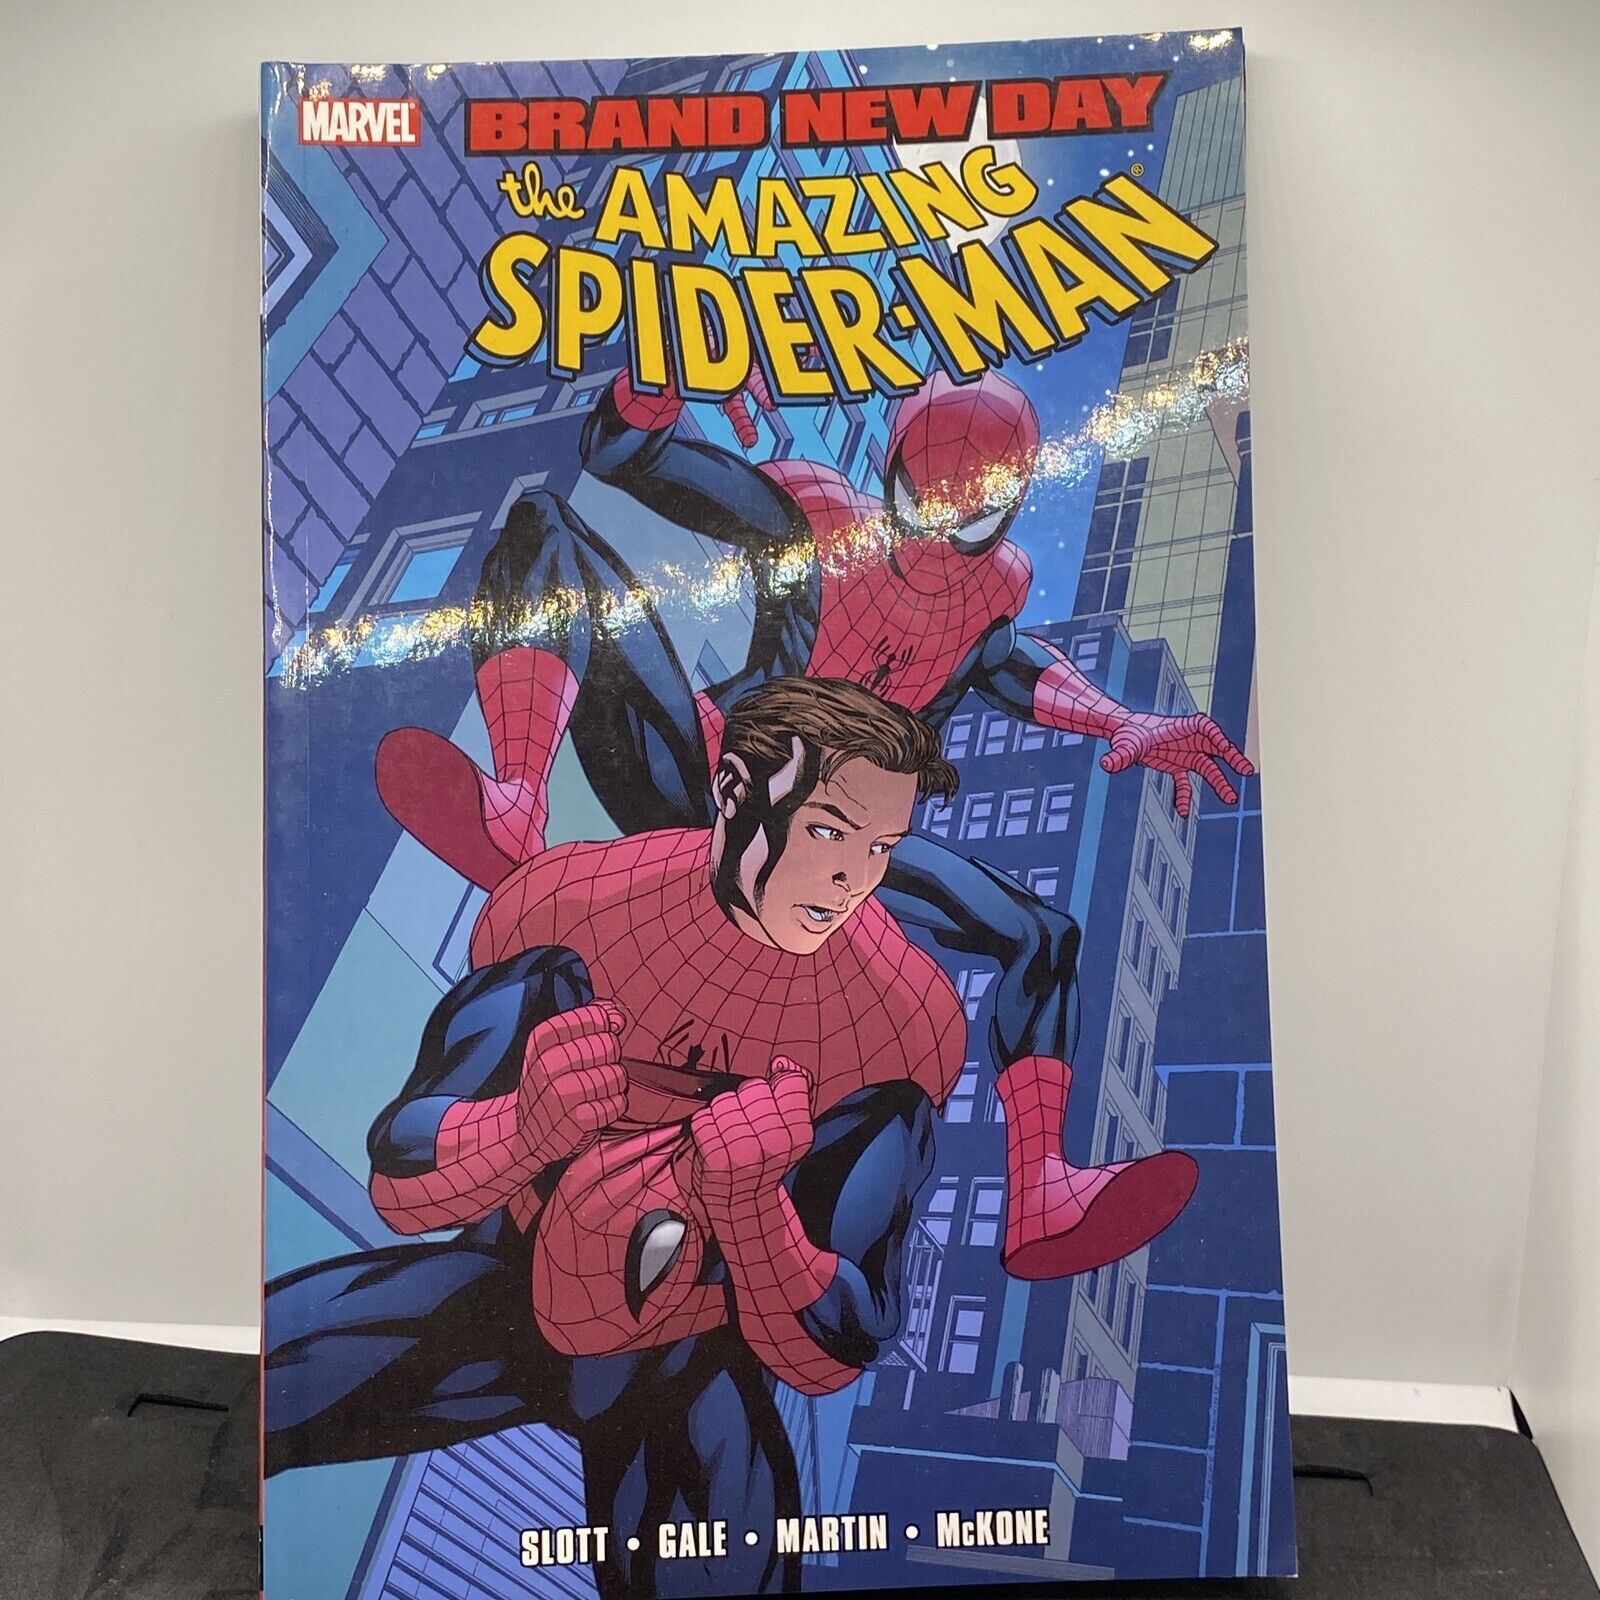 Spider-Man: Brand New Day #3 (Marvel Comics February 2009)